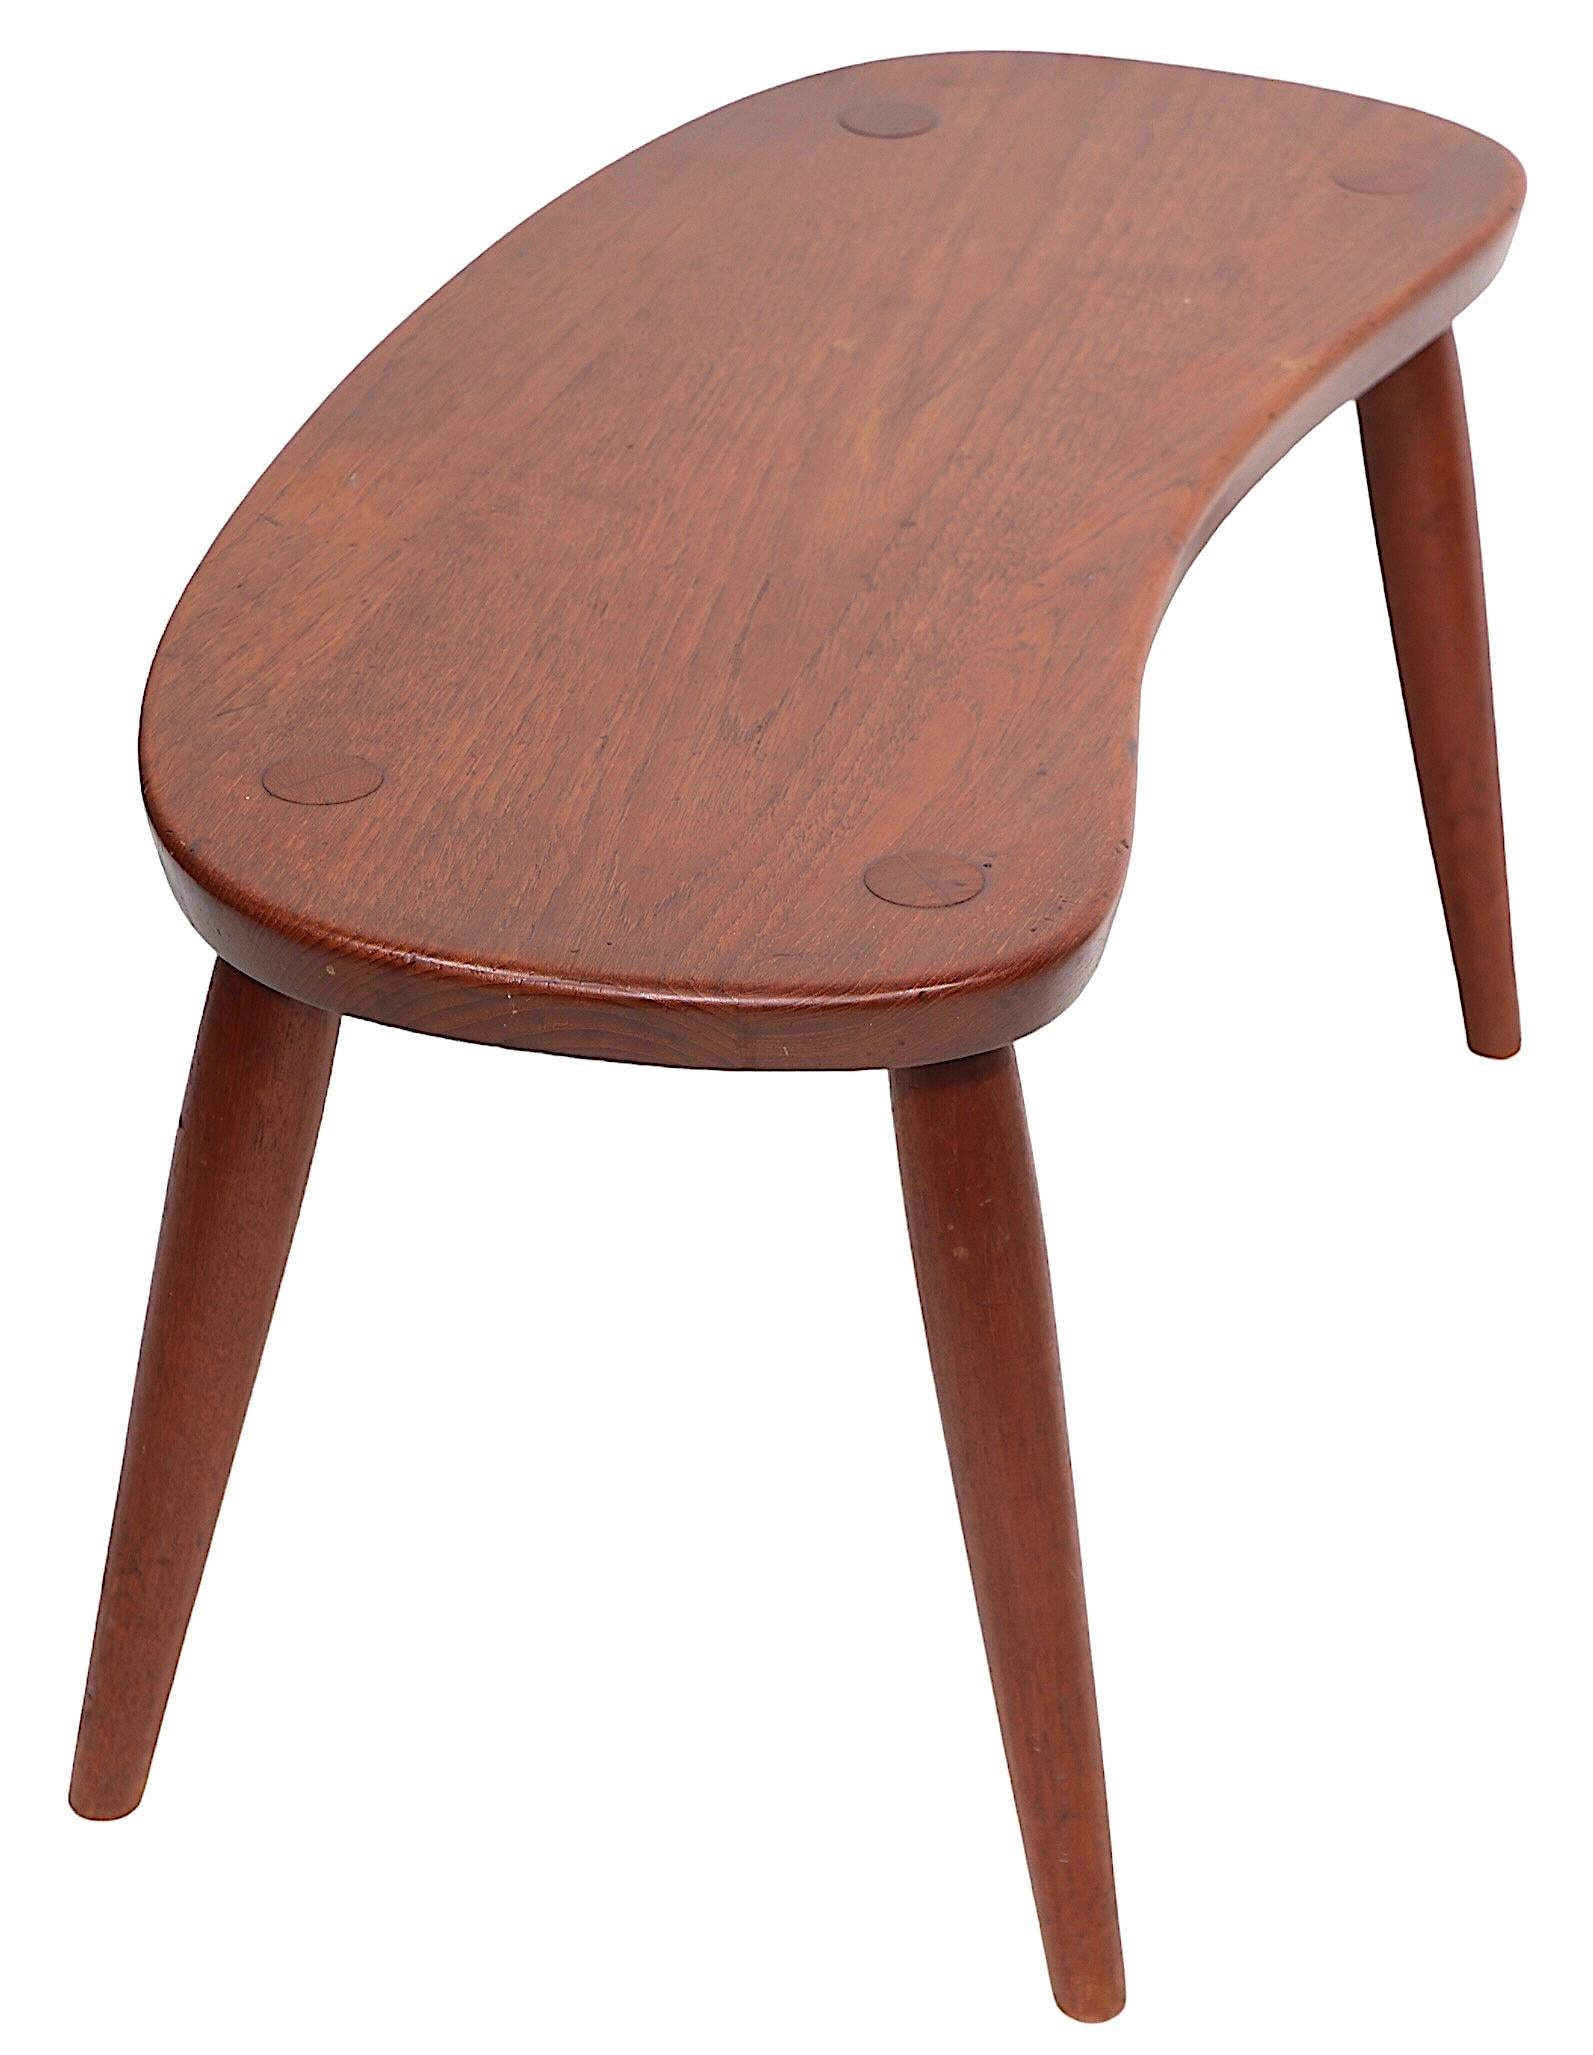 Pr. Danish Mid Century Modern Tables Made by Illum Bolighus att. to Josef Frank  In Good Condition For Sale In New York, NY